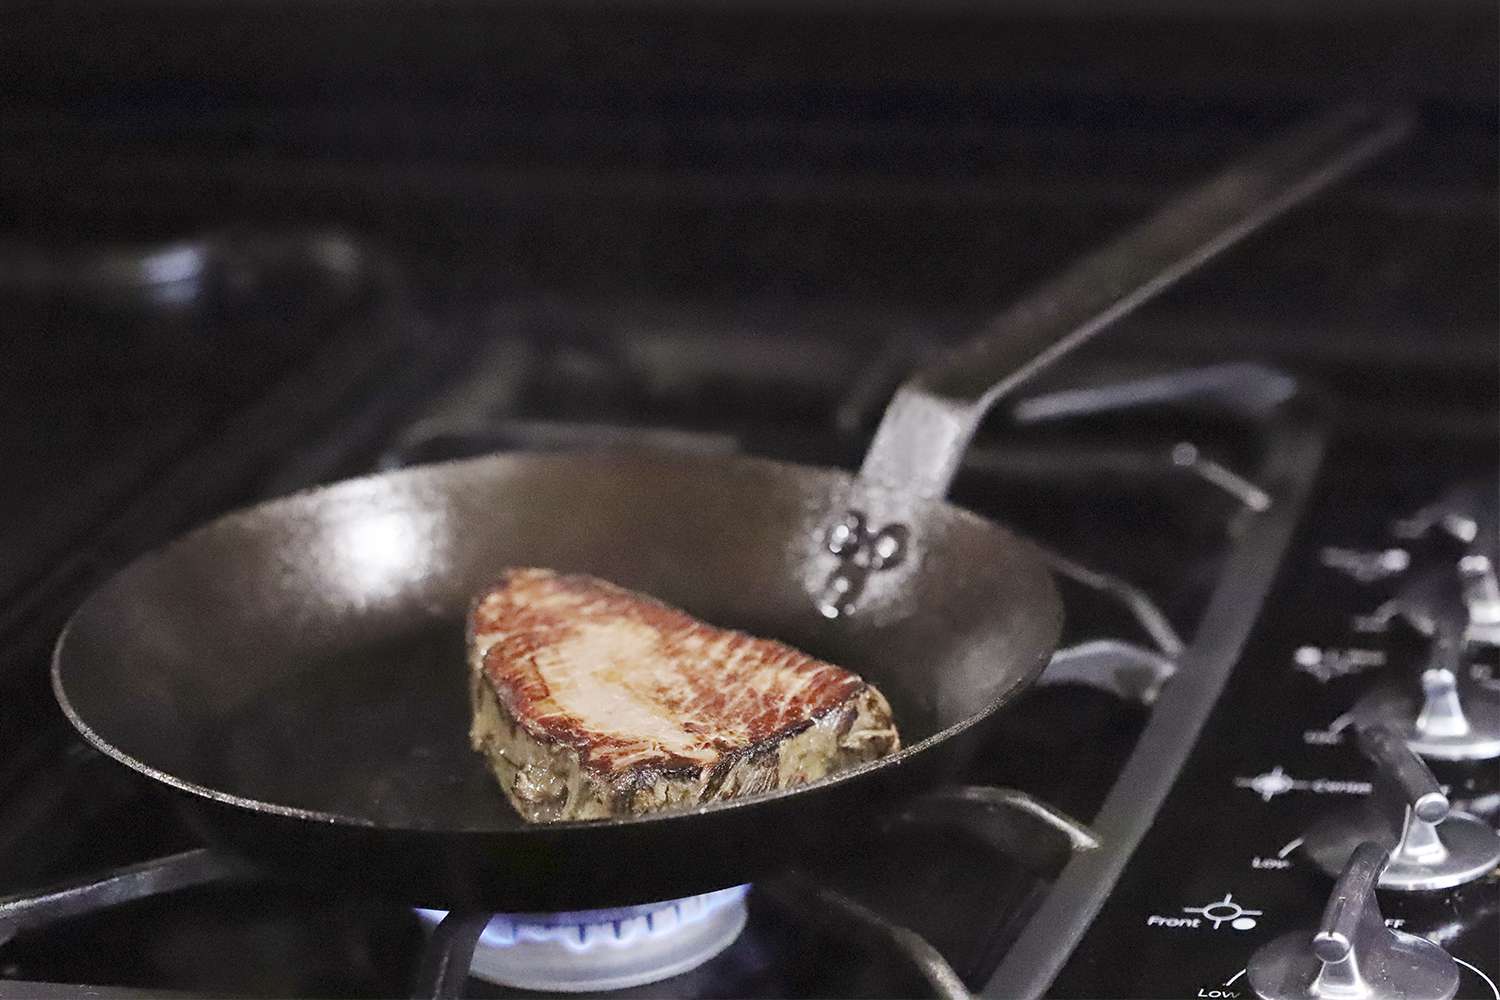 Lodge Seasoned Carbon Steel Skillet searing a steak on the stove 